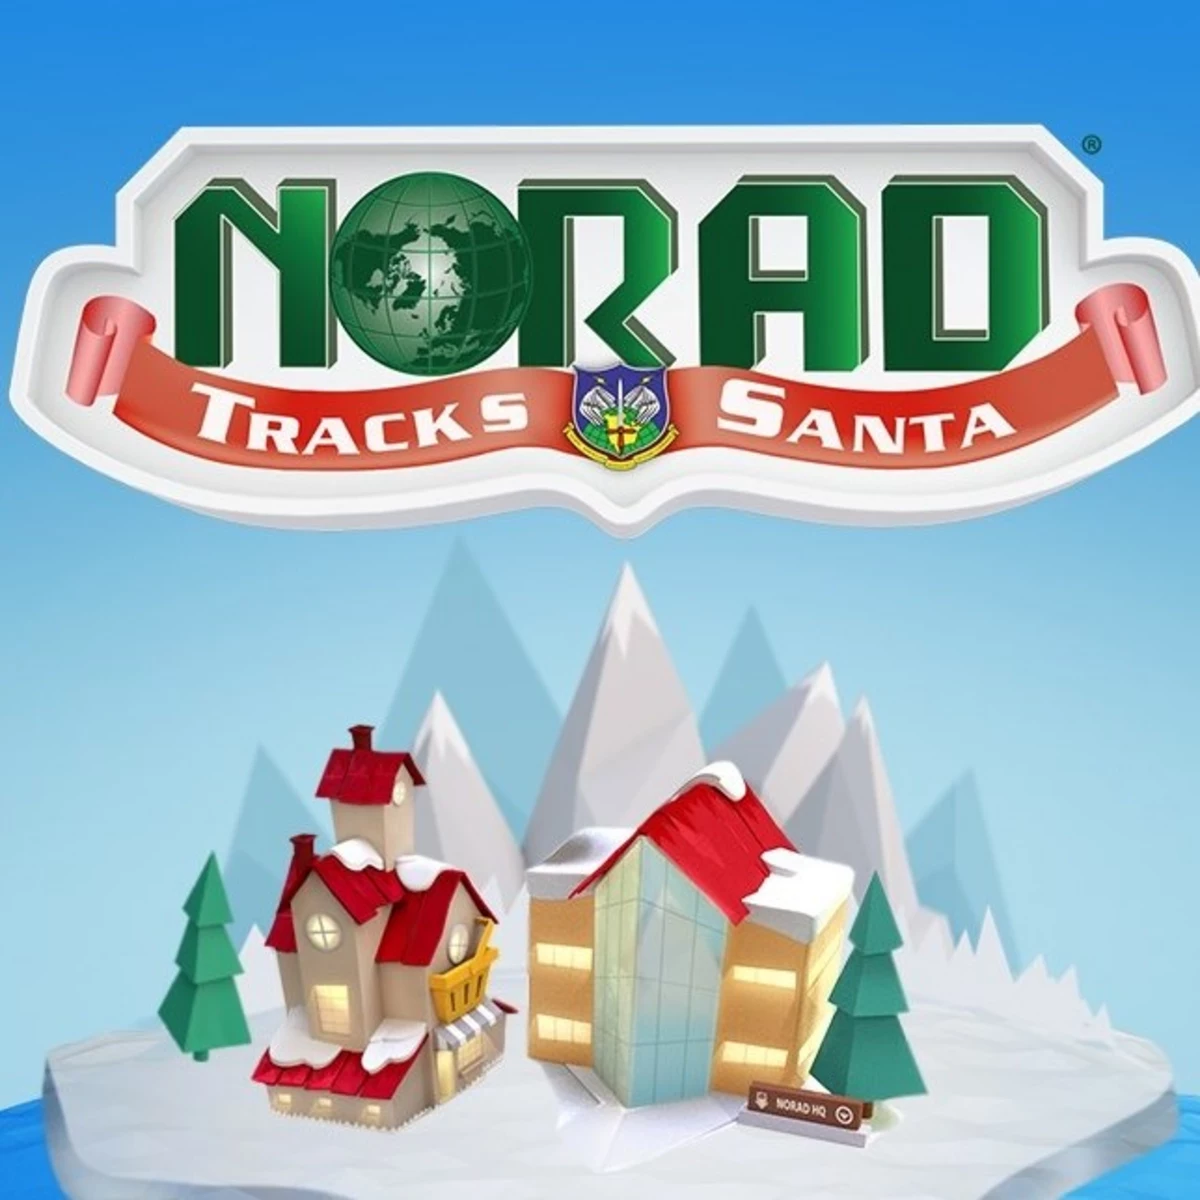 Track Santa with NORAD'S New and Improved Santa Tracker!